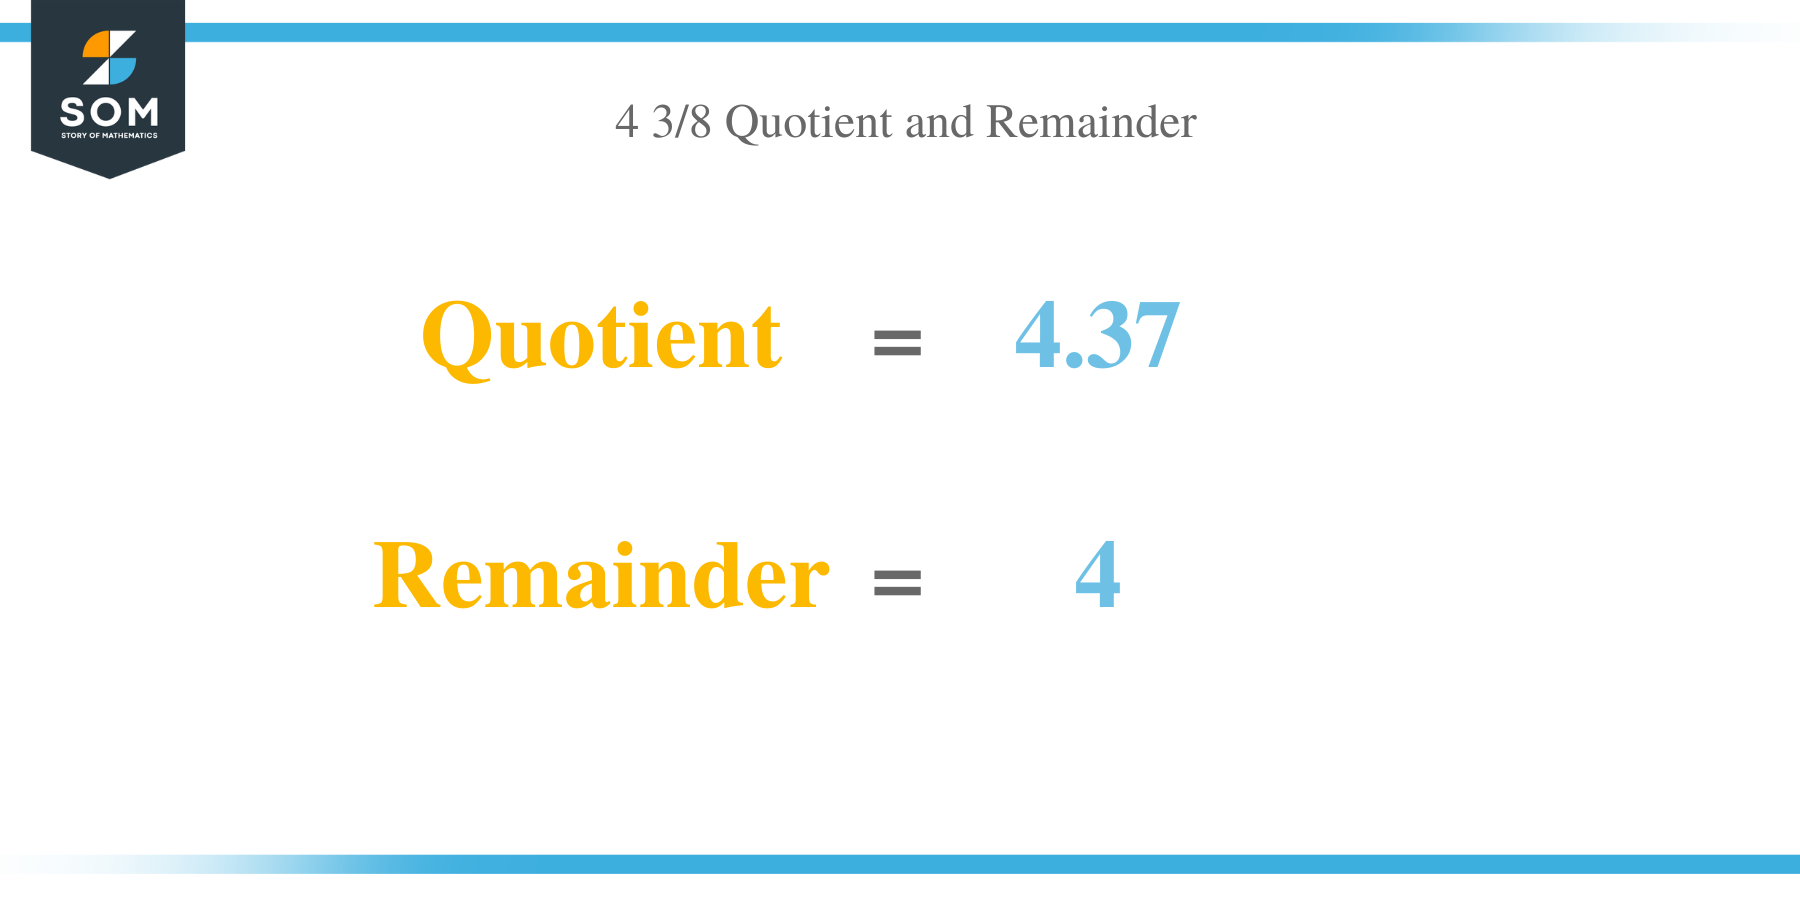 Quotient and remainder of 4 3 per 8